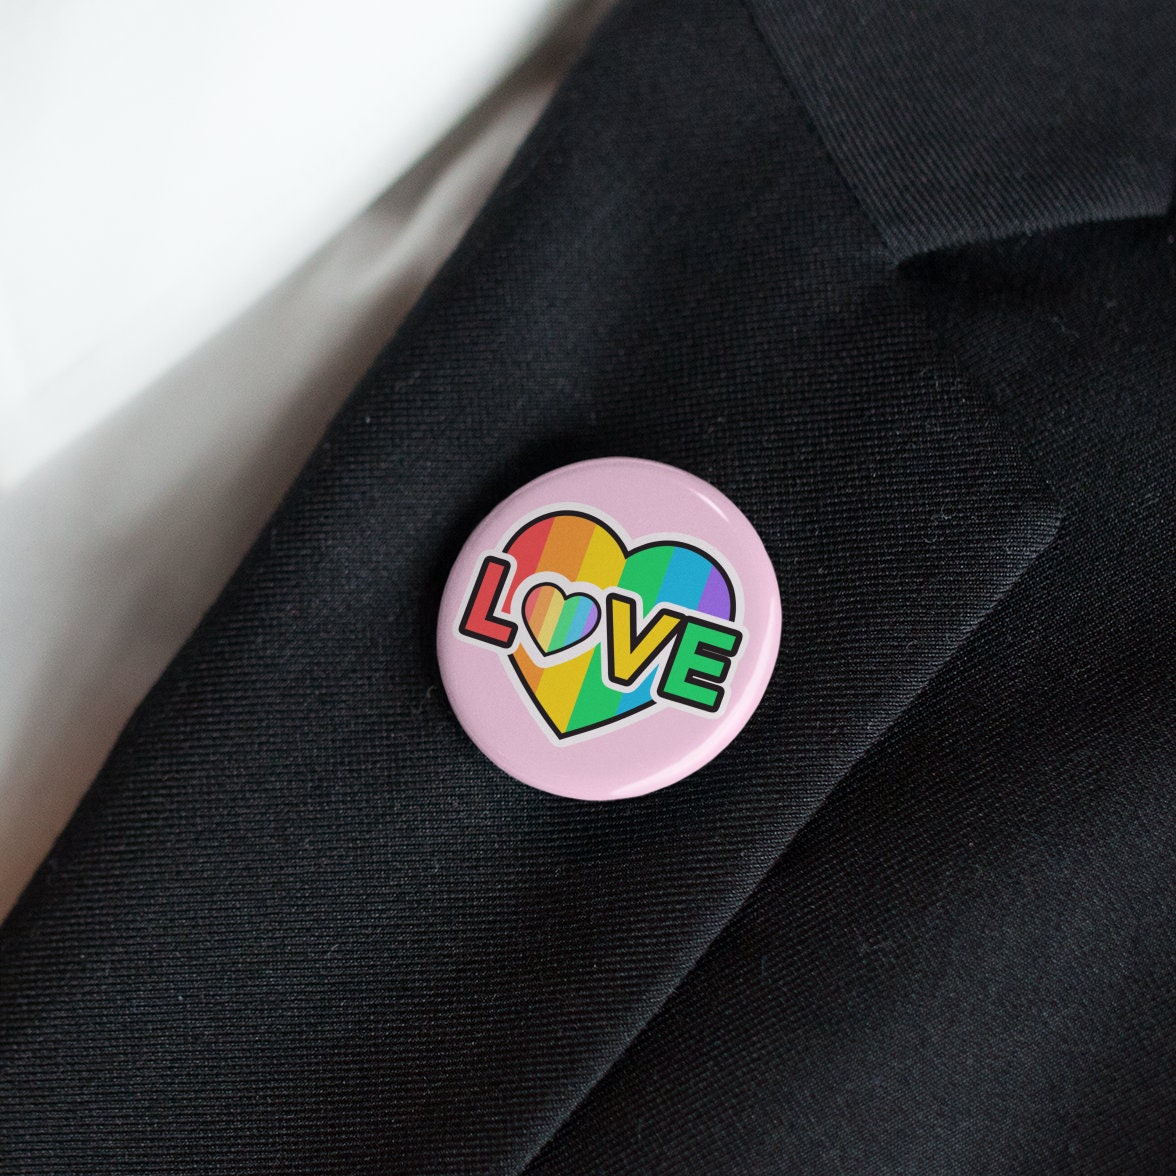 Love Heart Pride Pin Badge | Gay Pride Pin - Cute Gift - Equality Badges